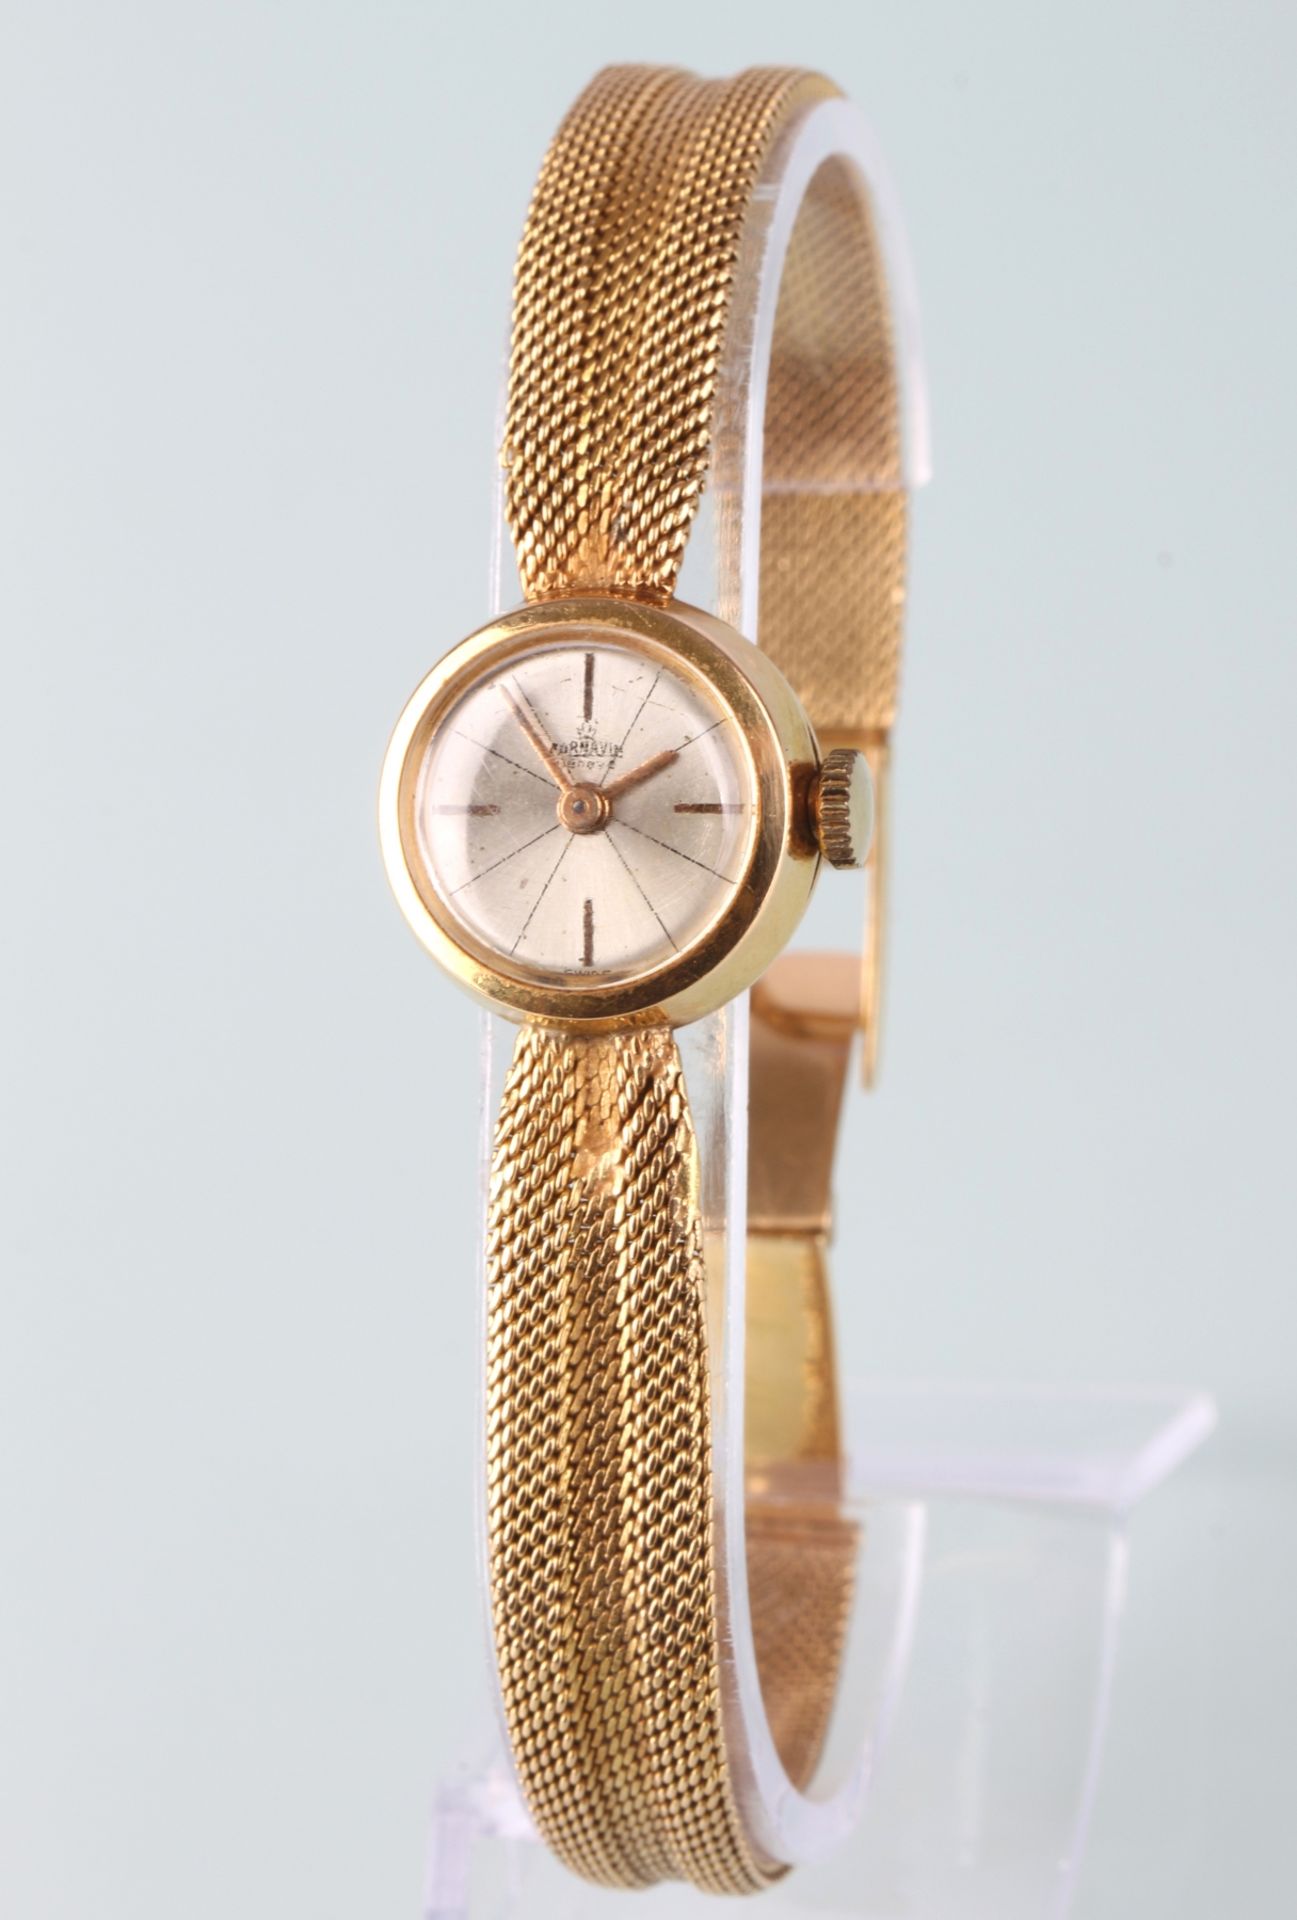 750 Gold Cornavin Geneve Armbanduhr, 18K gold wristwatch,